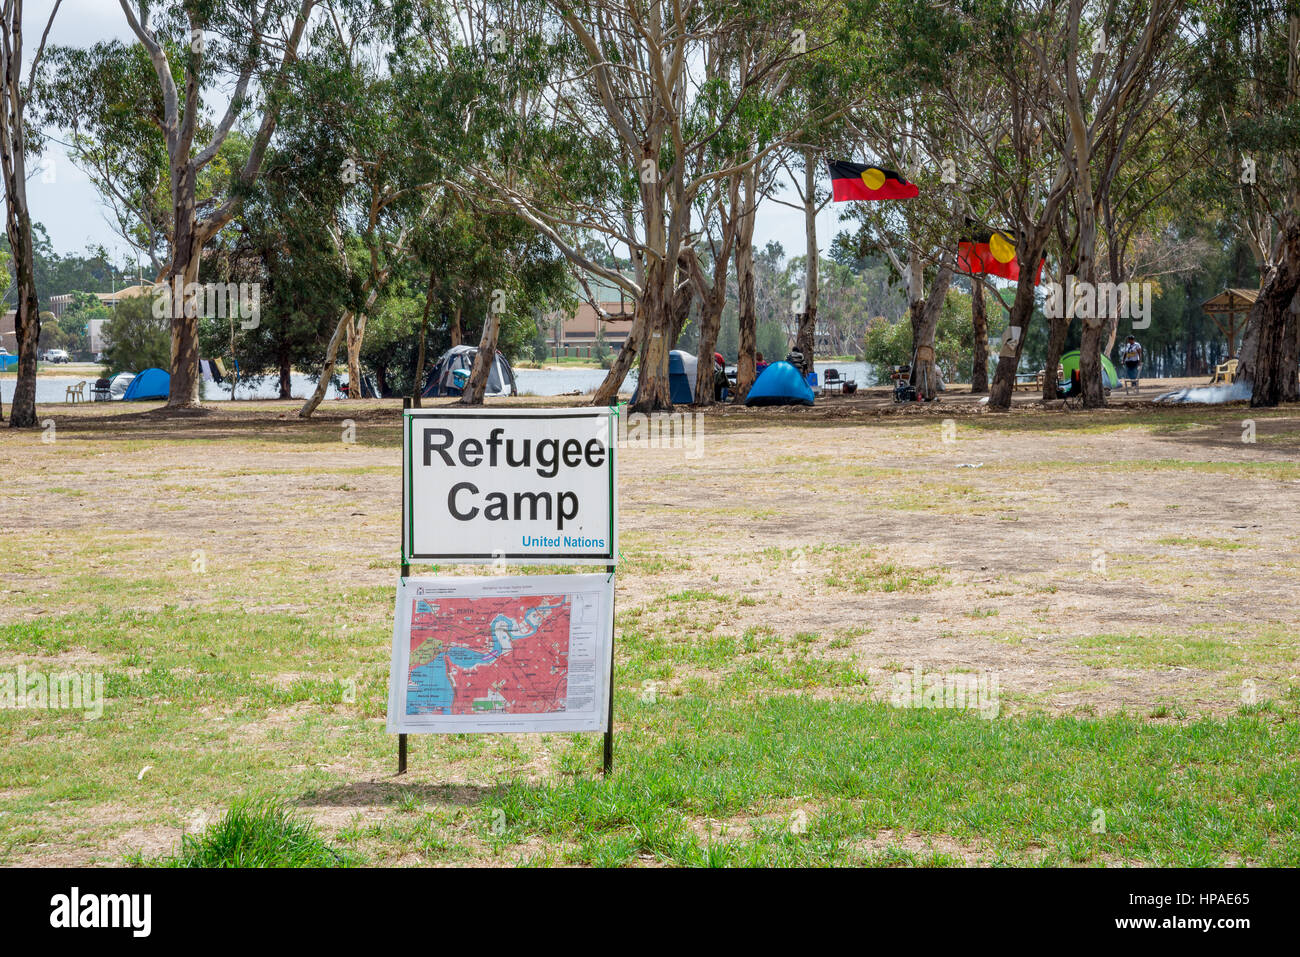 A Refugee Camp on Heirisson Island in Peth, Western Australia Stock Photo